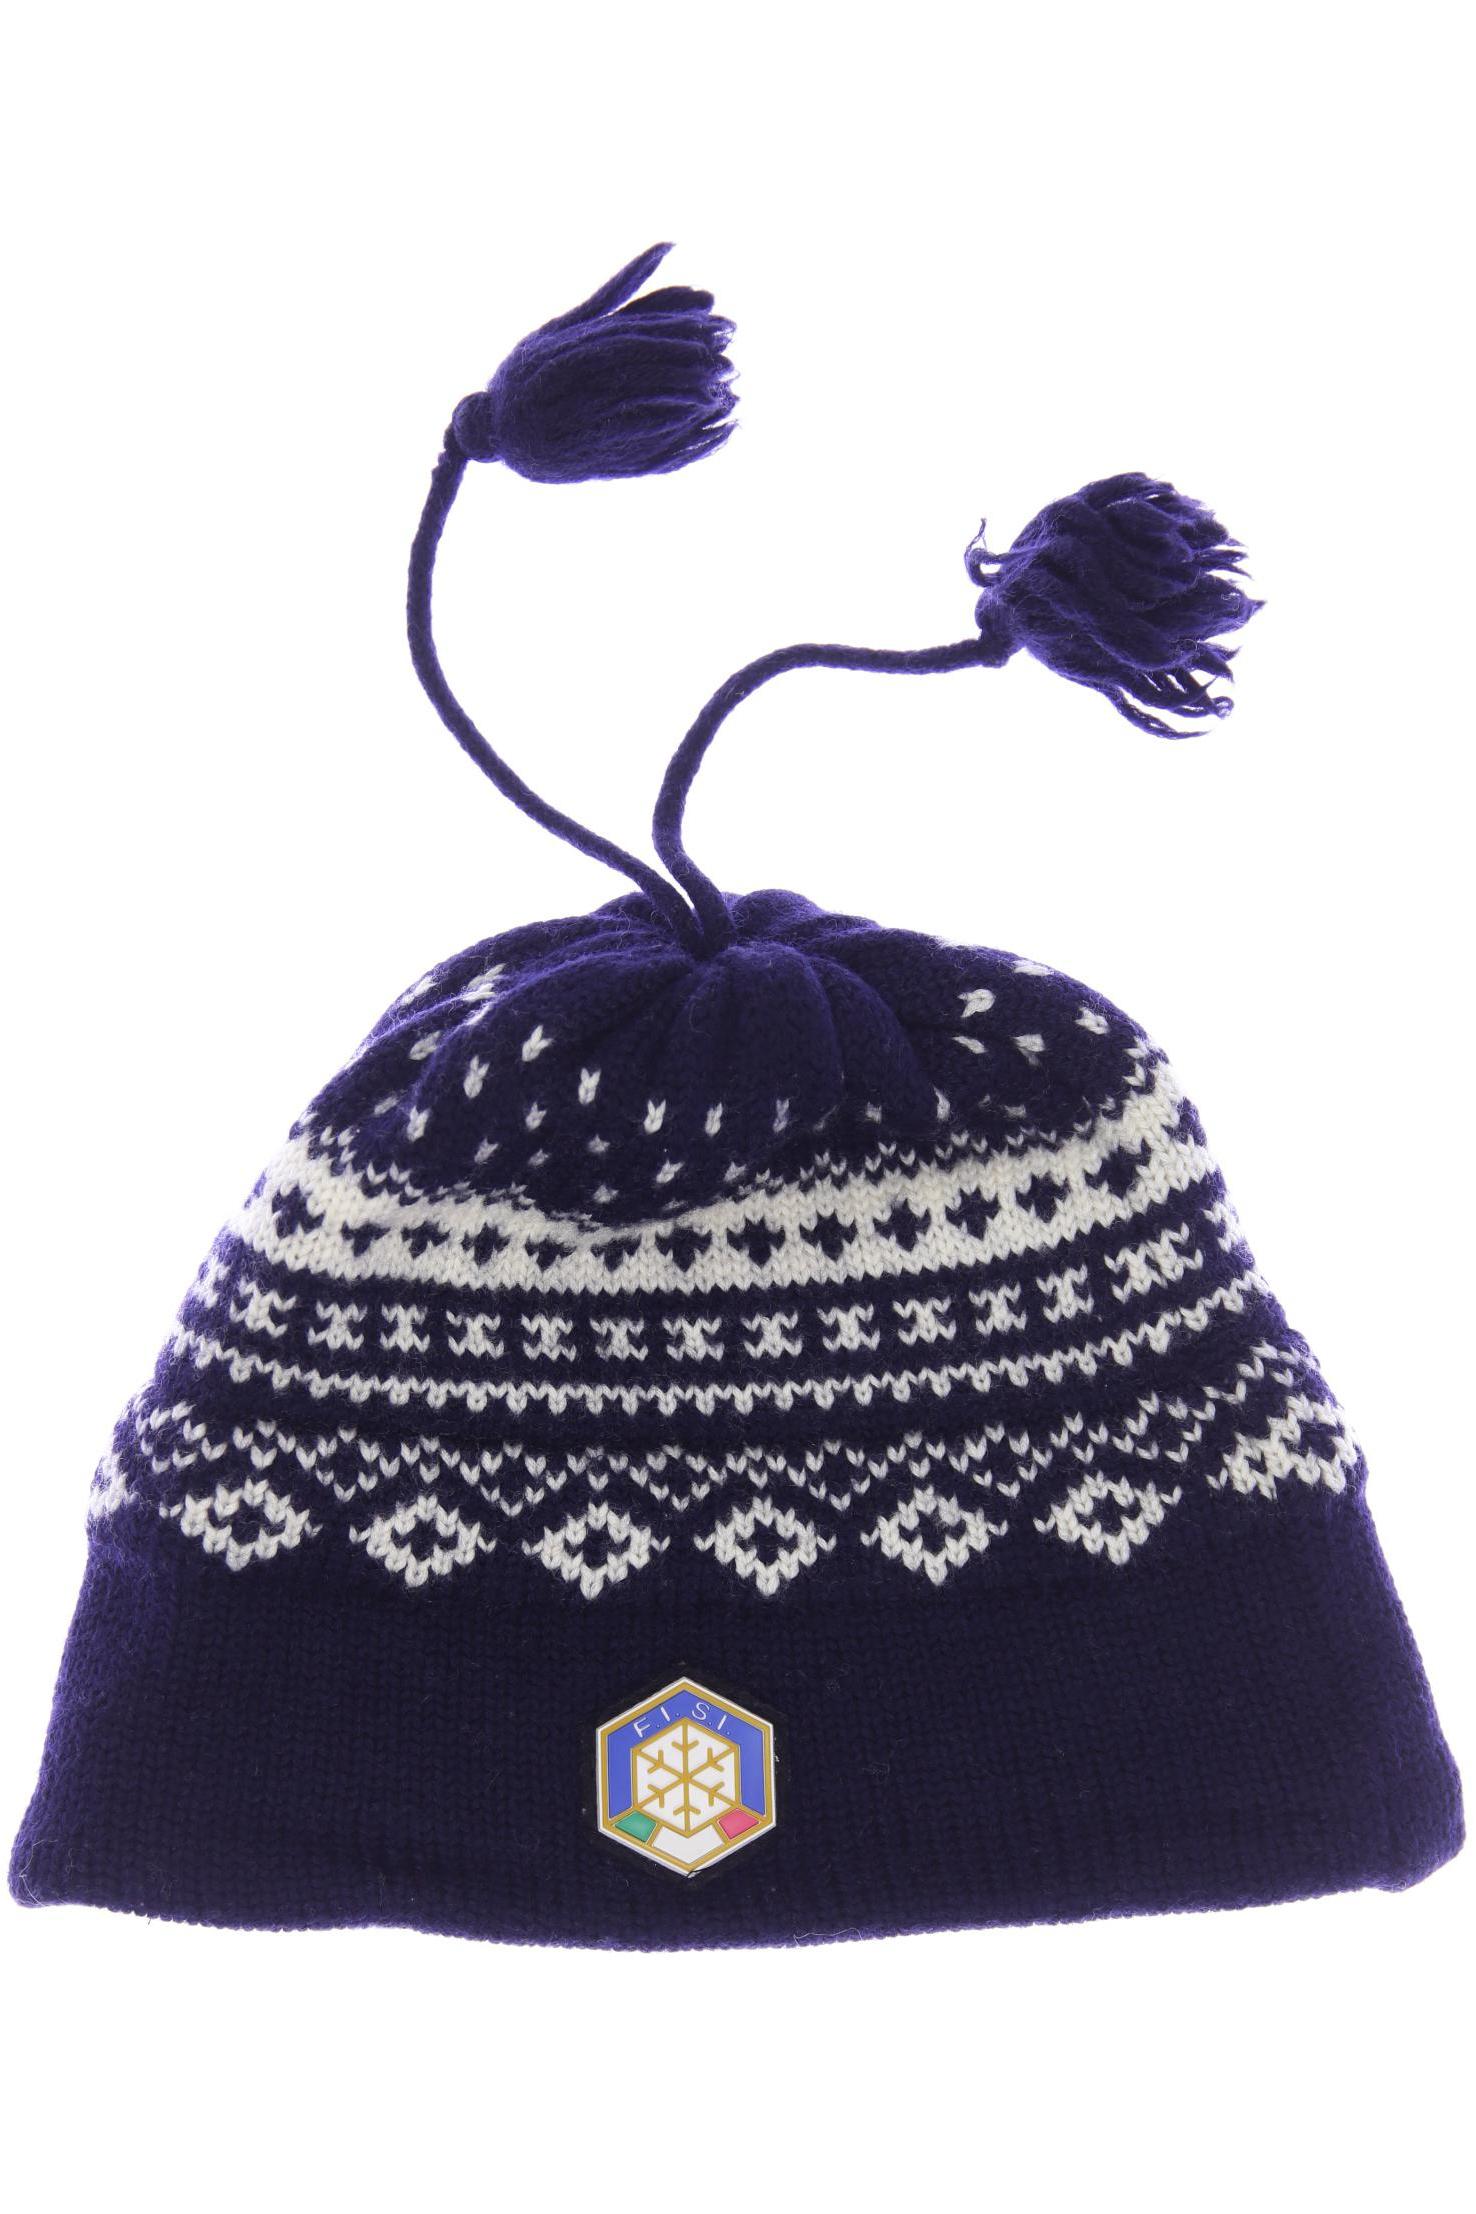 Fila Damen Hut/Mütze, marineblau, Gr. 56 von Fila